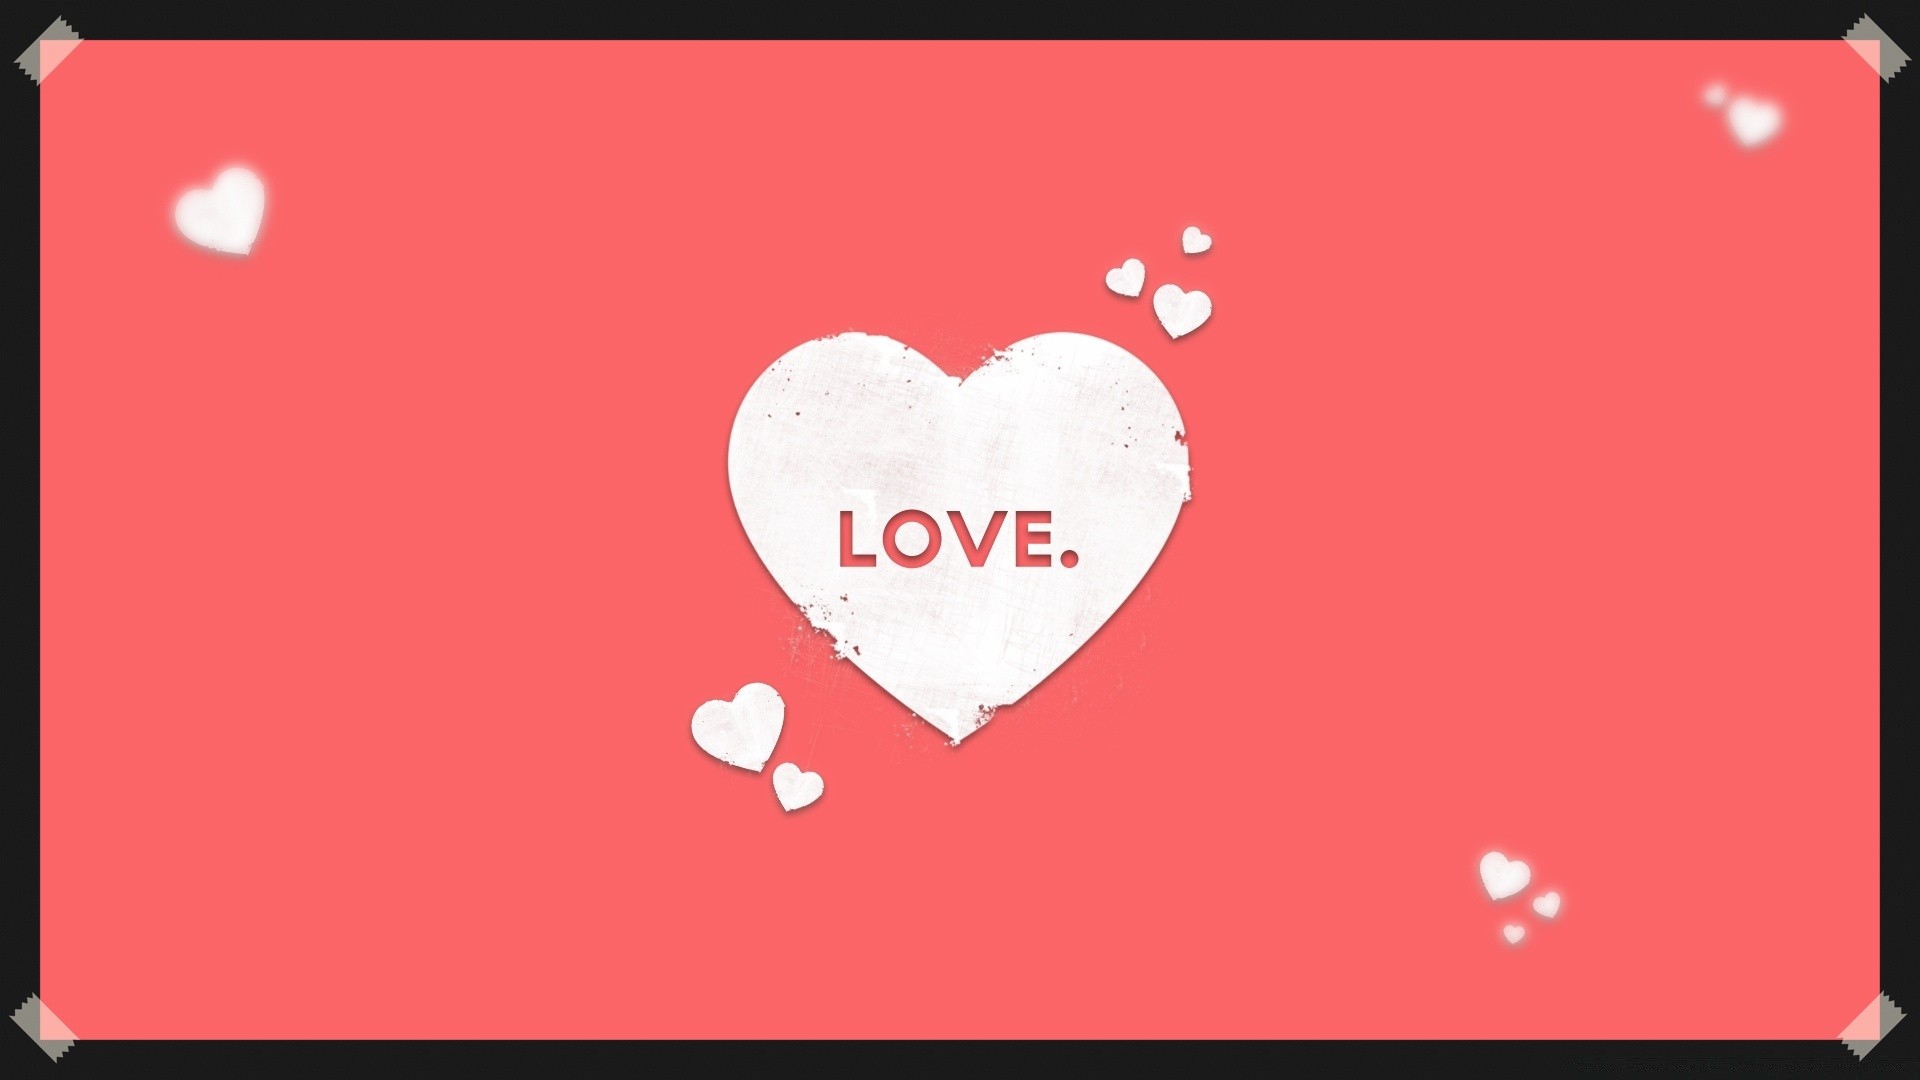 hearts love heart illustration romance vector design symbol celebration desktop wedding greeting shape shining gift pattern card